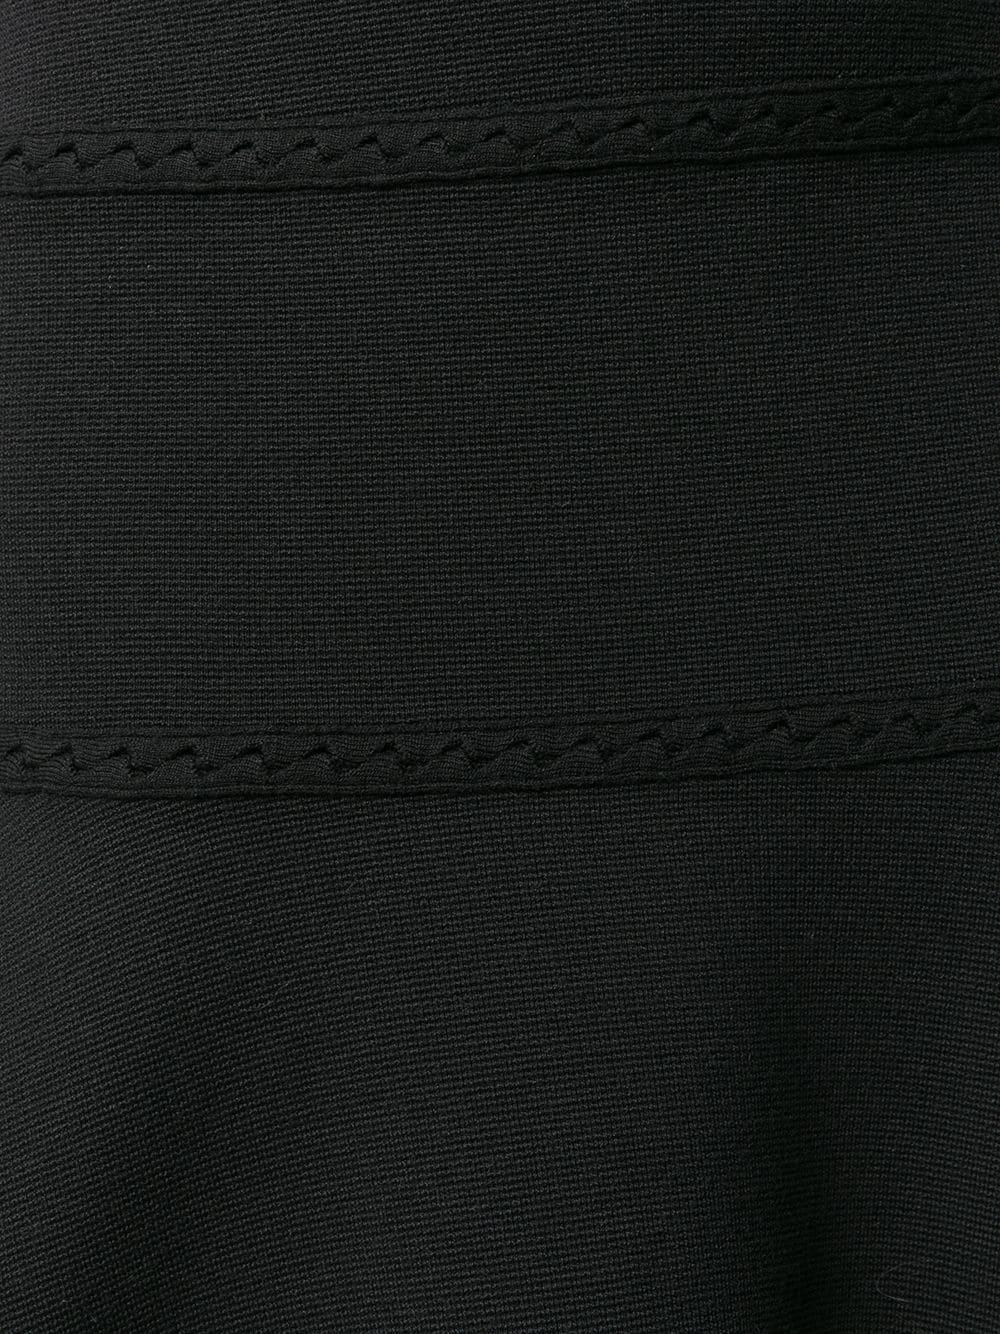 Alaia Skate Black Lace Detail Skirt For Sale 2